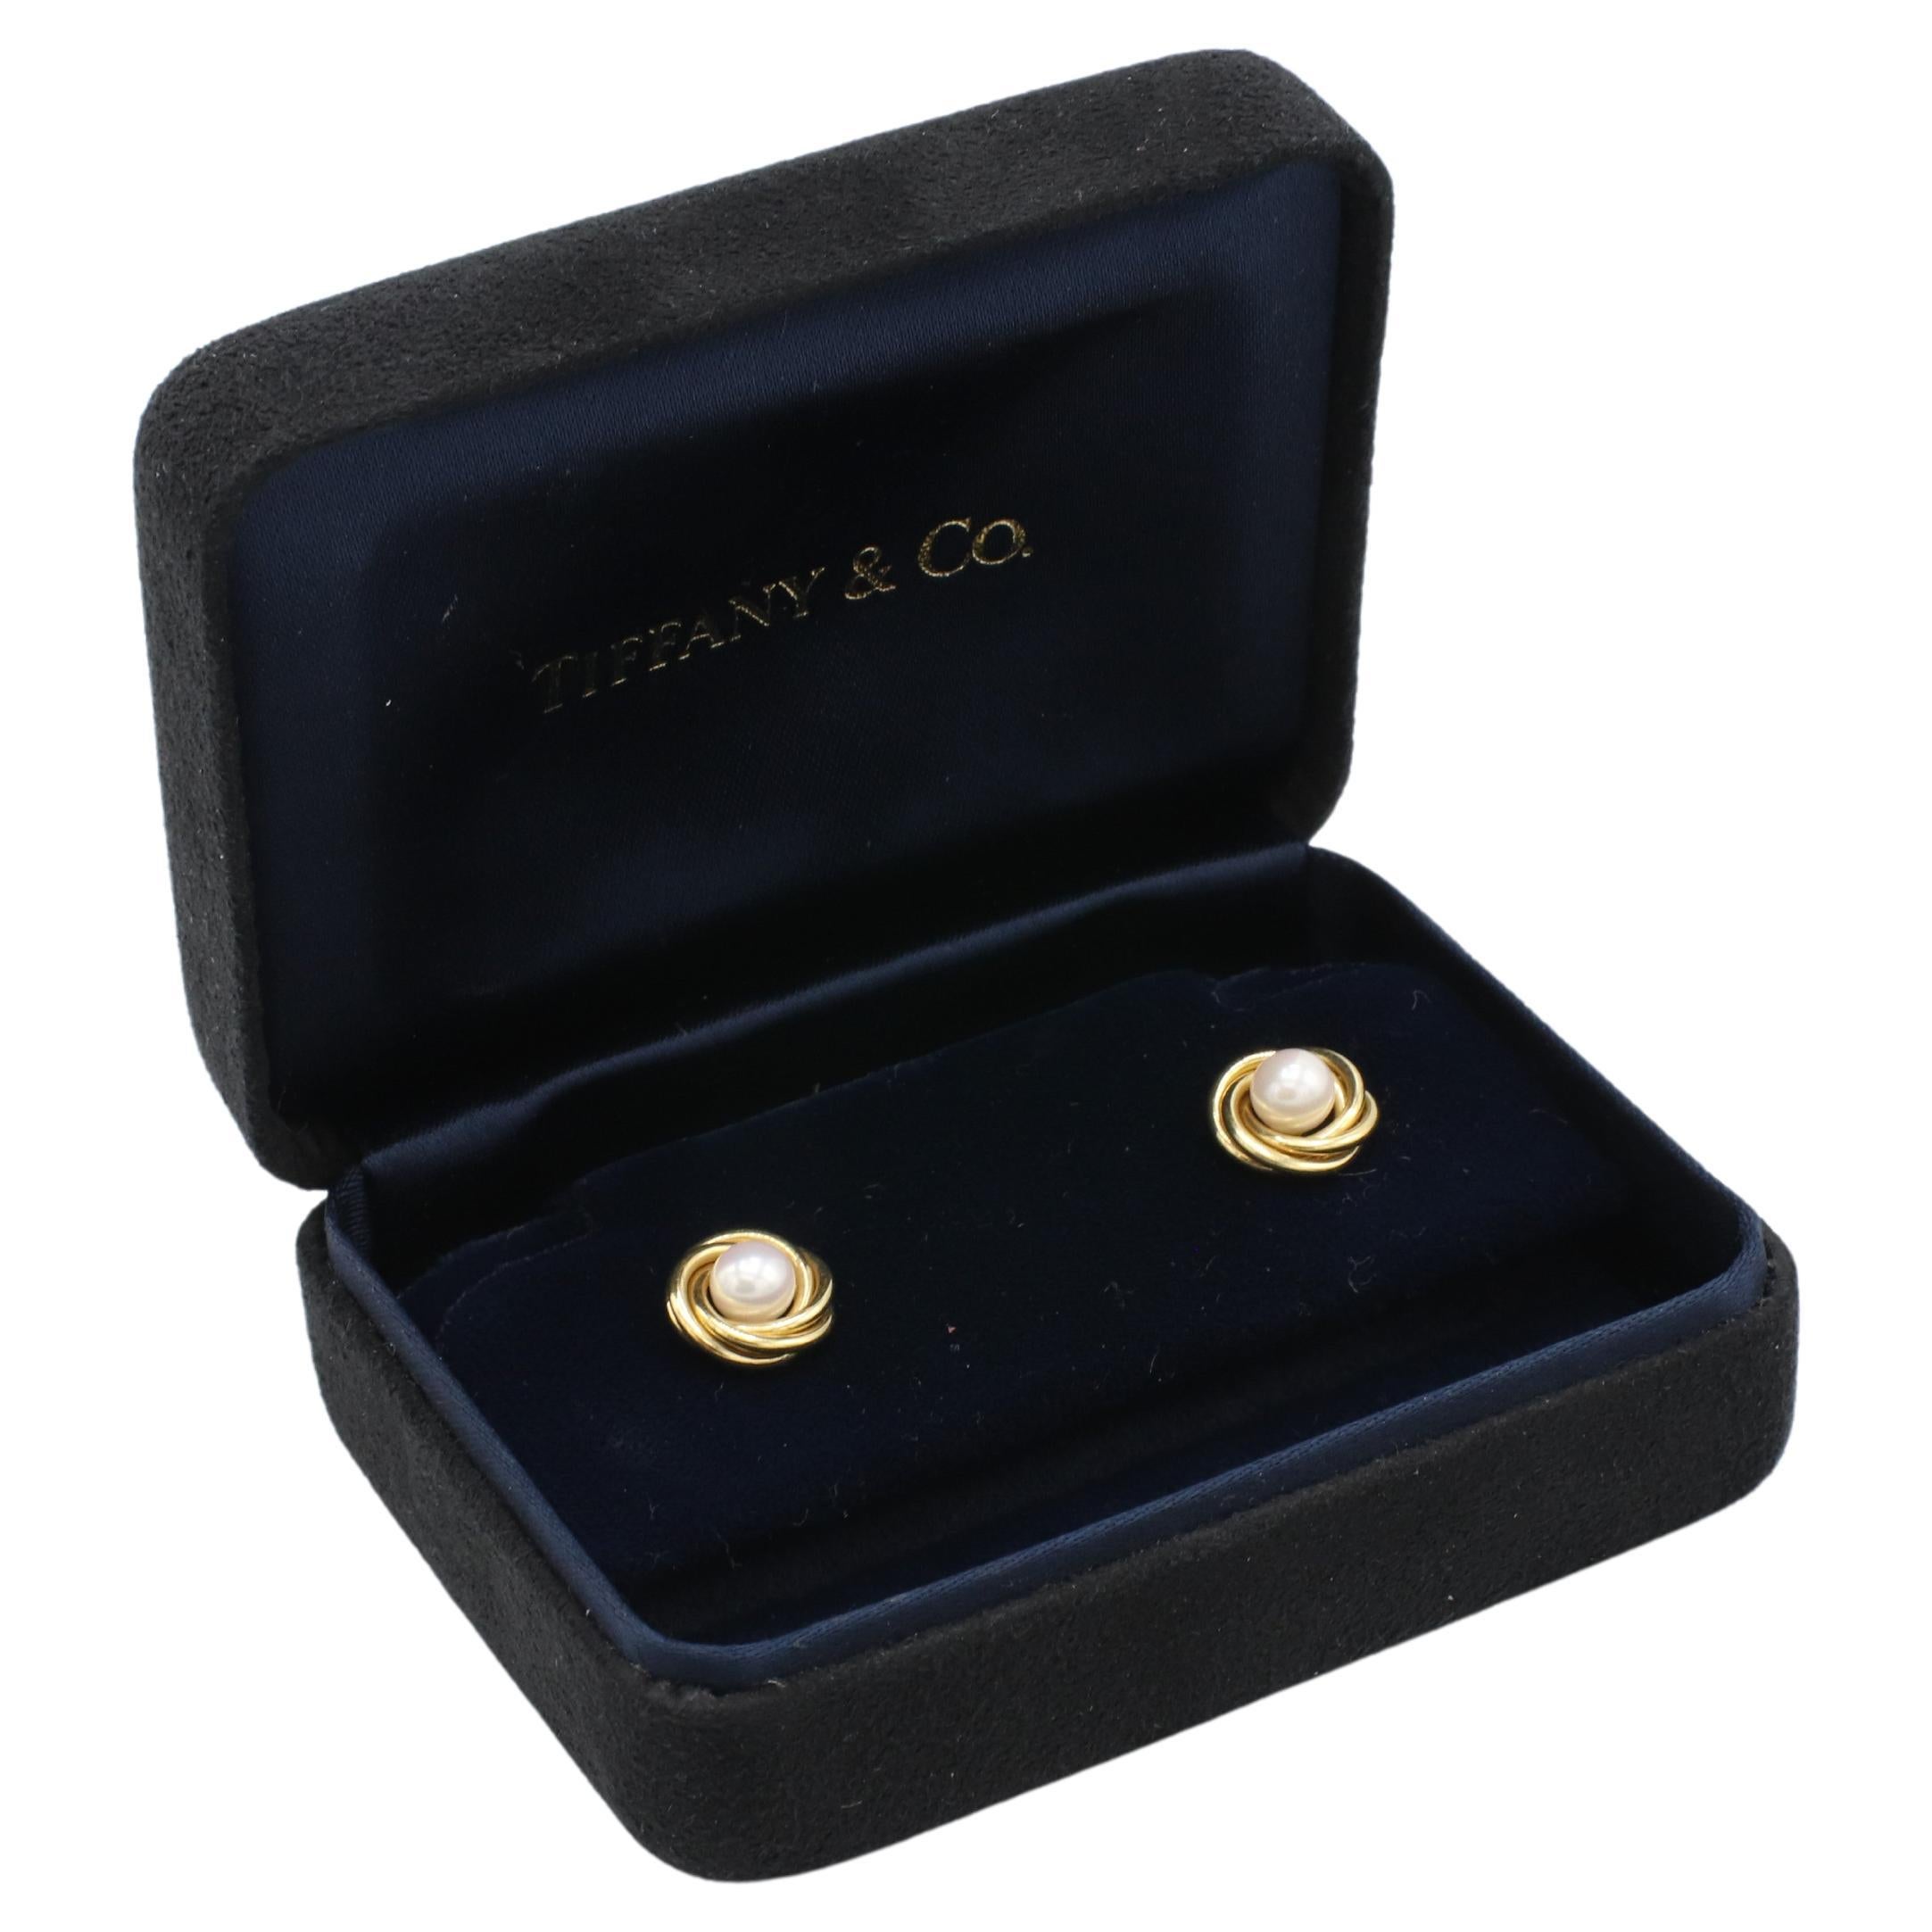 Tiffany & Co. 18 Karat Yellow Gold Knot Pearl Stud Earrings 
Metal: 18k yellow gold (backs 14k)
Weight: 4.34 grams
Diameter: 10.5mm
Pearls: 5mm, white Akoya cultured pearls
Backs: Push backs, (backings not T&Co.)